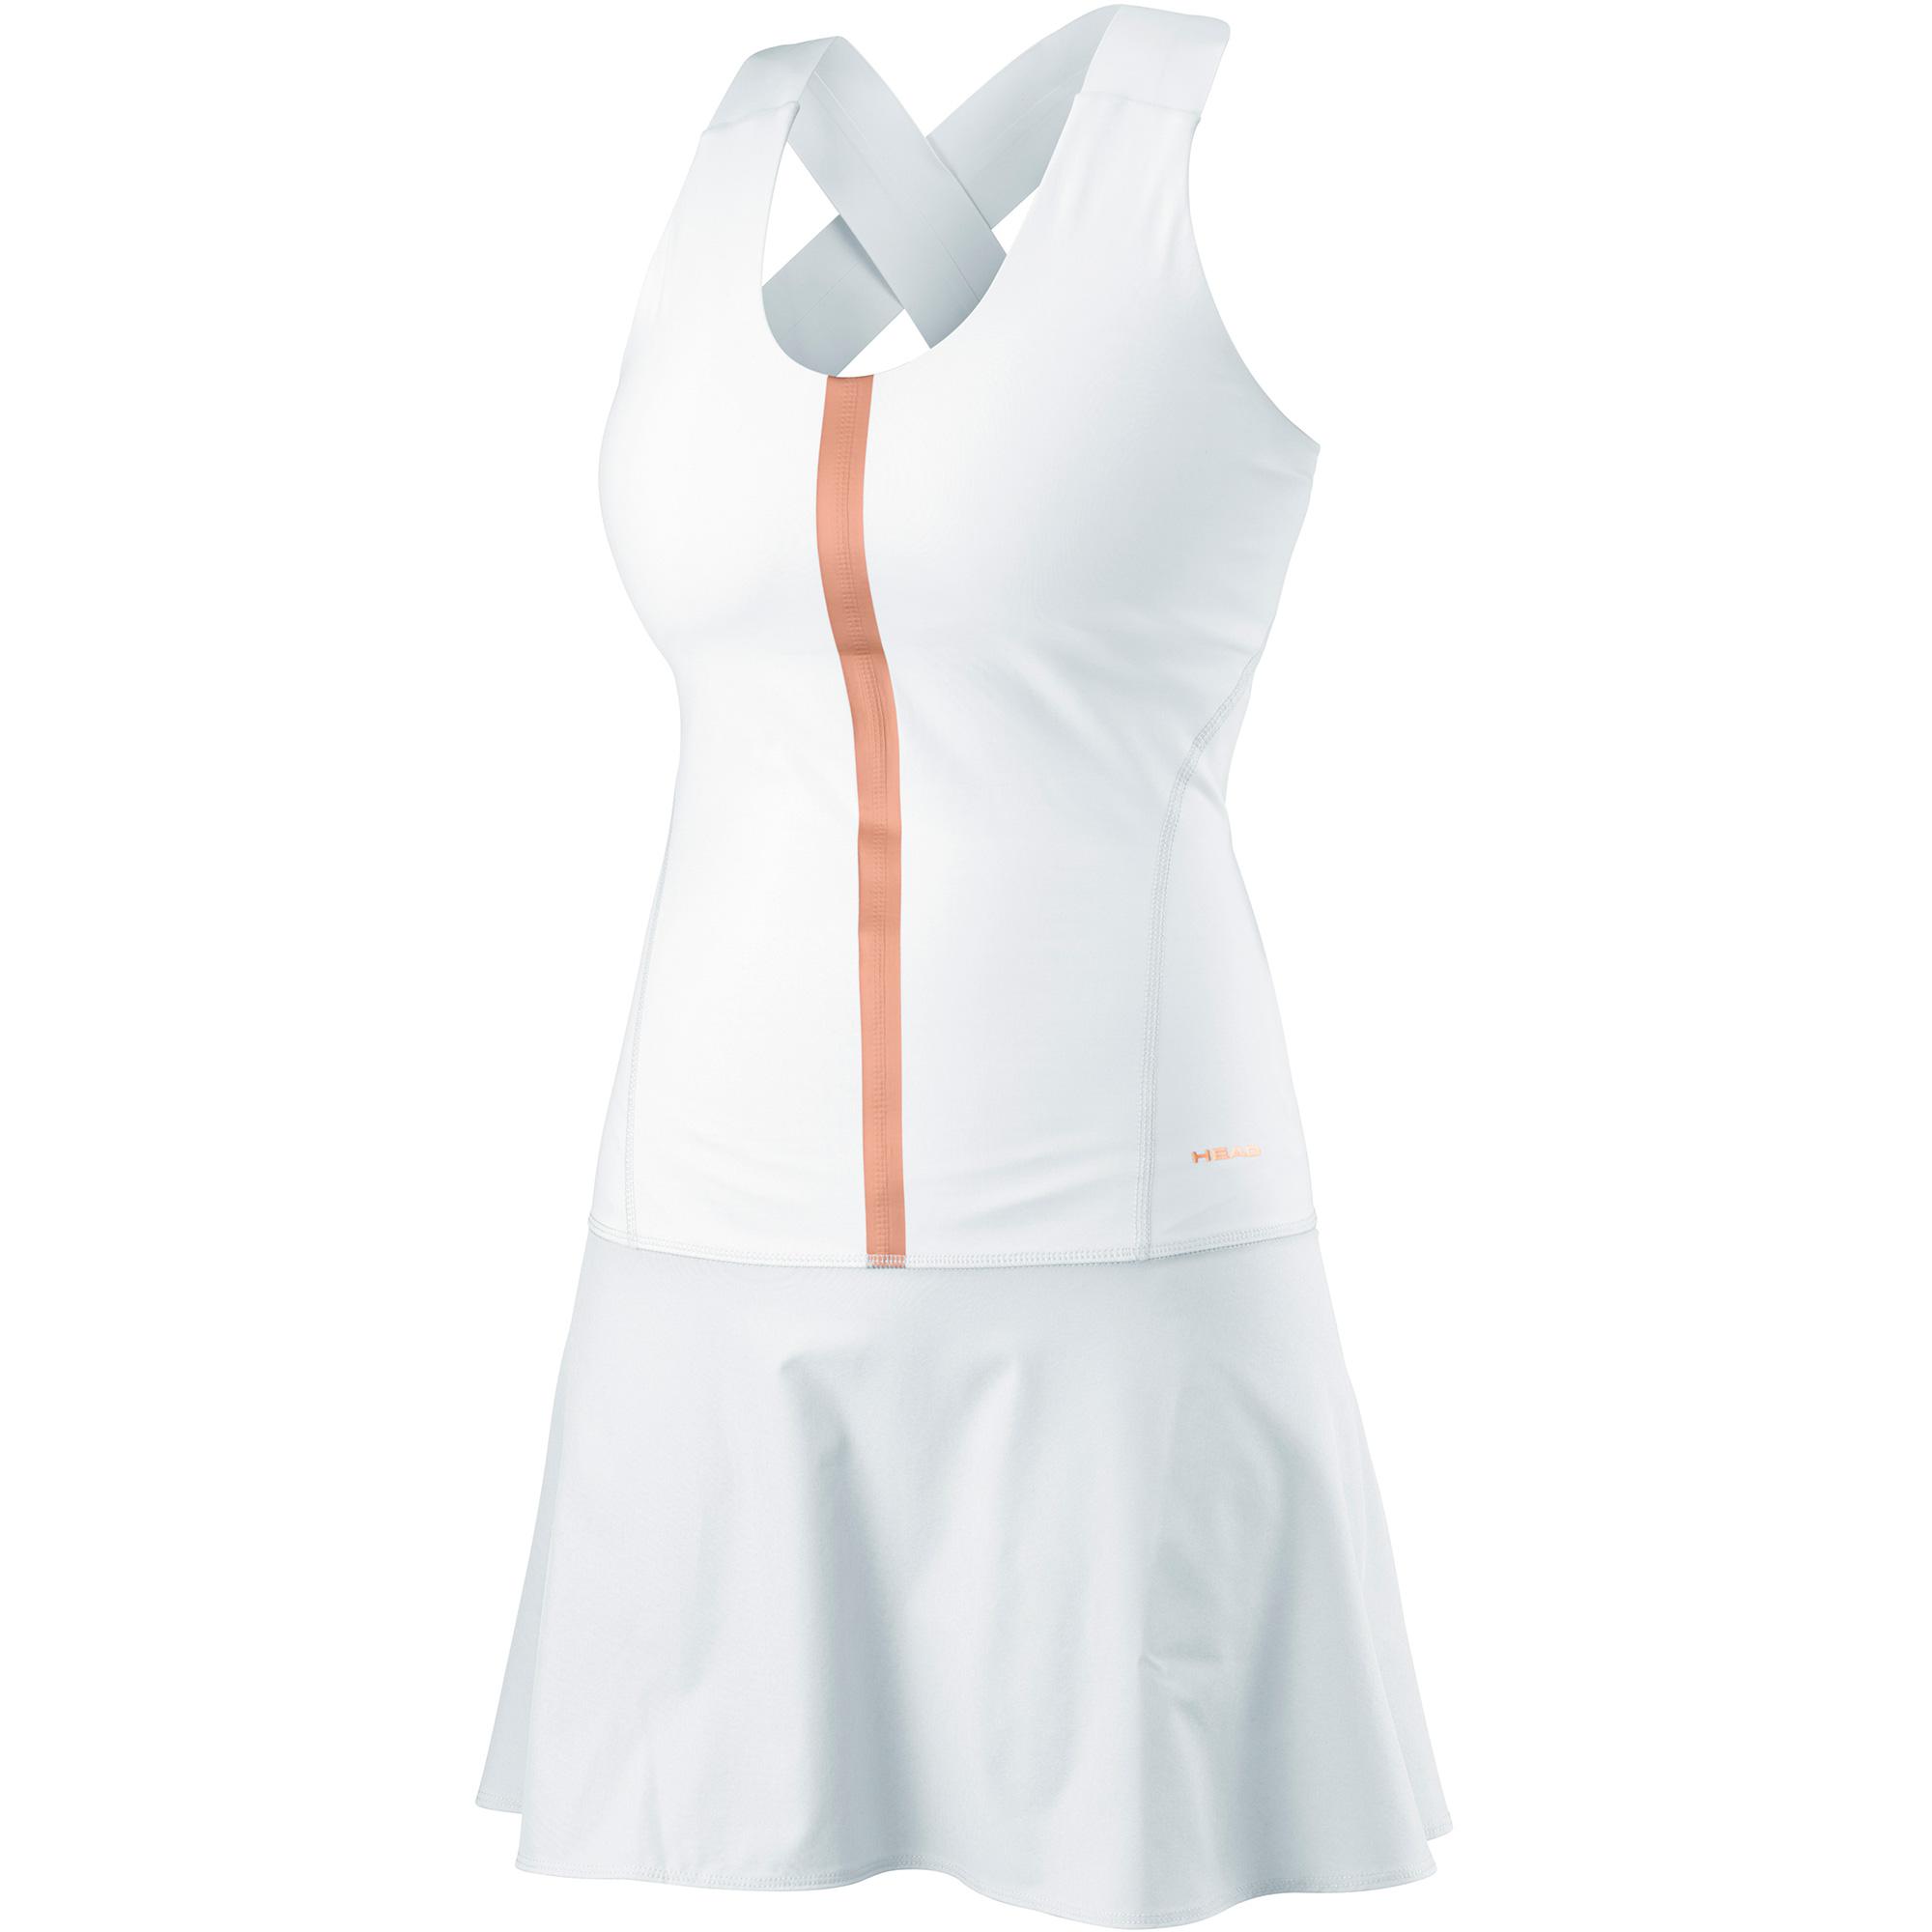 Details about   HEAD Performance Alba Tennis Dress NWT XS XXS Black White 